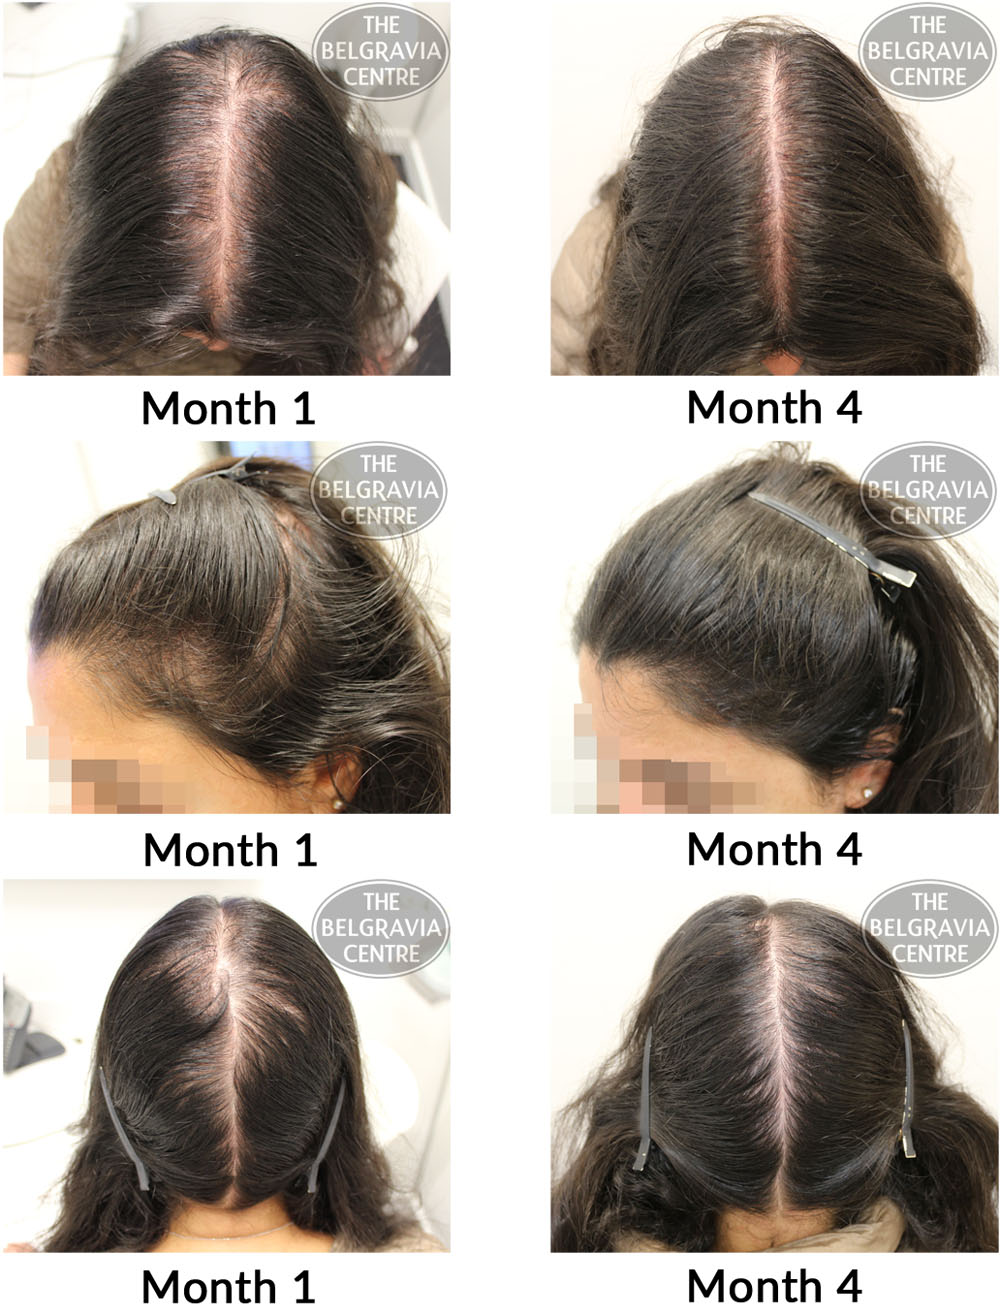 female pattern hair loss the belgravia centre 25 04 17